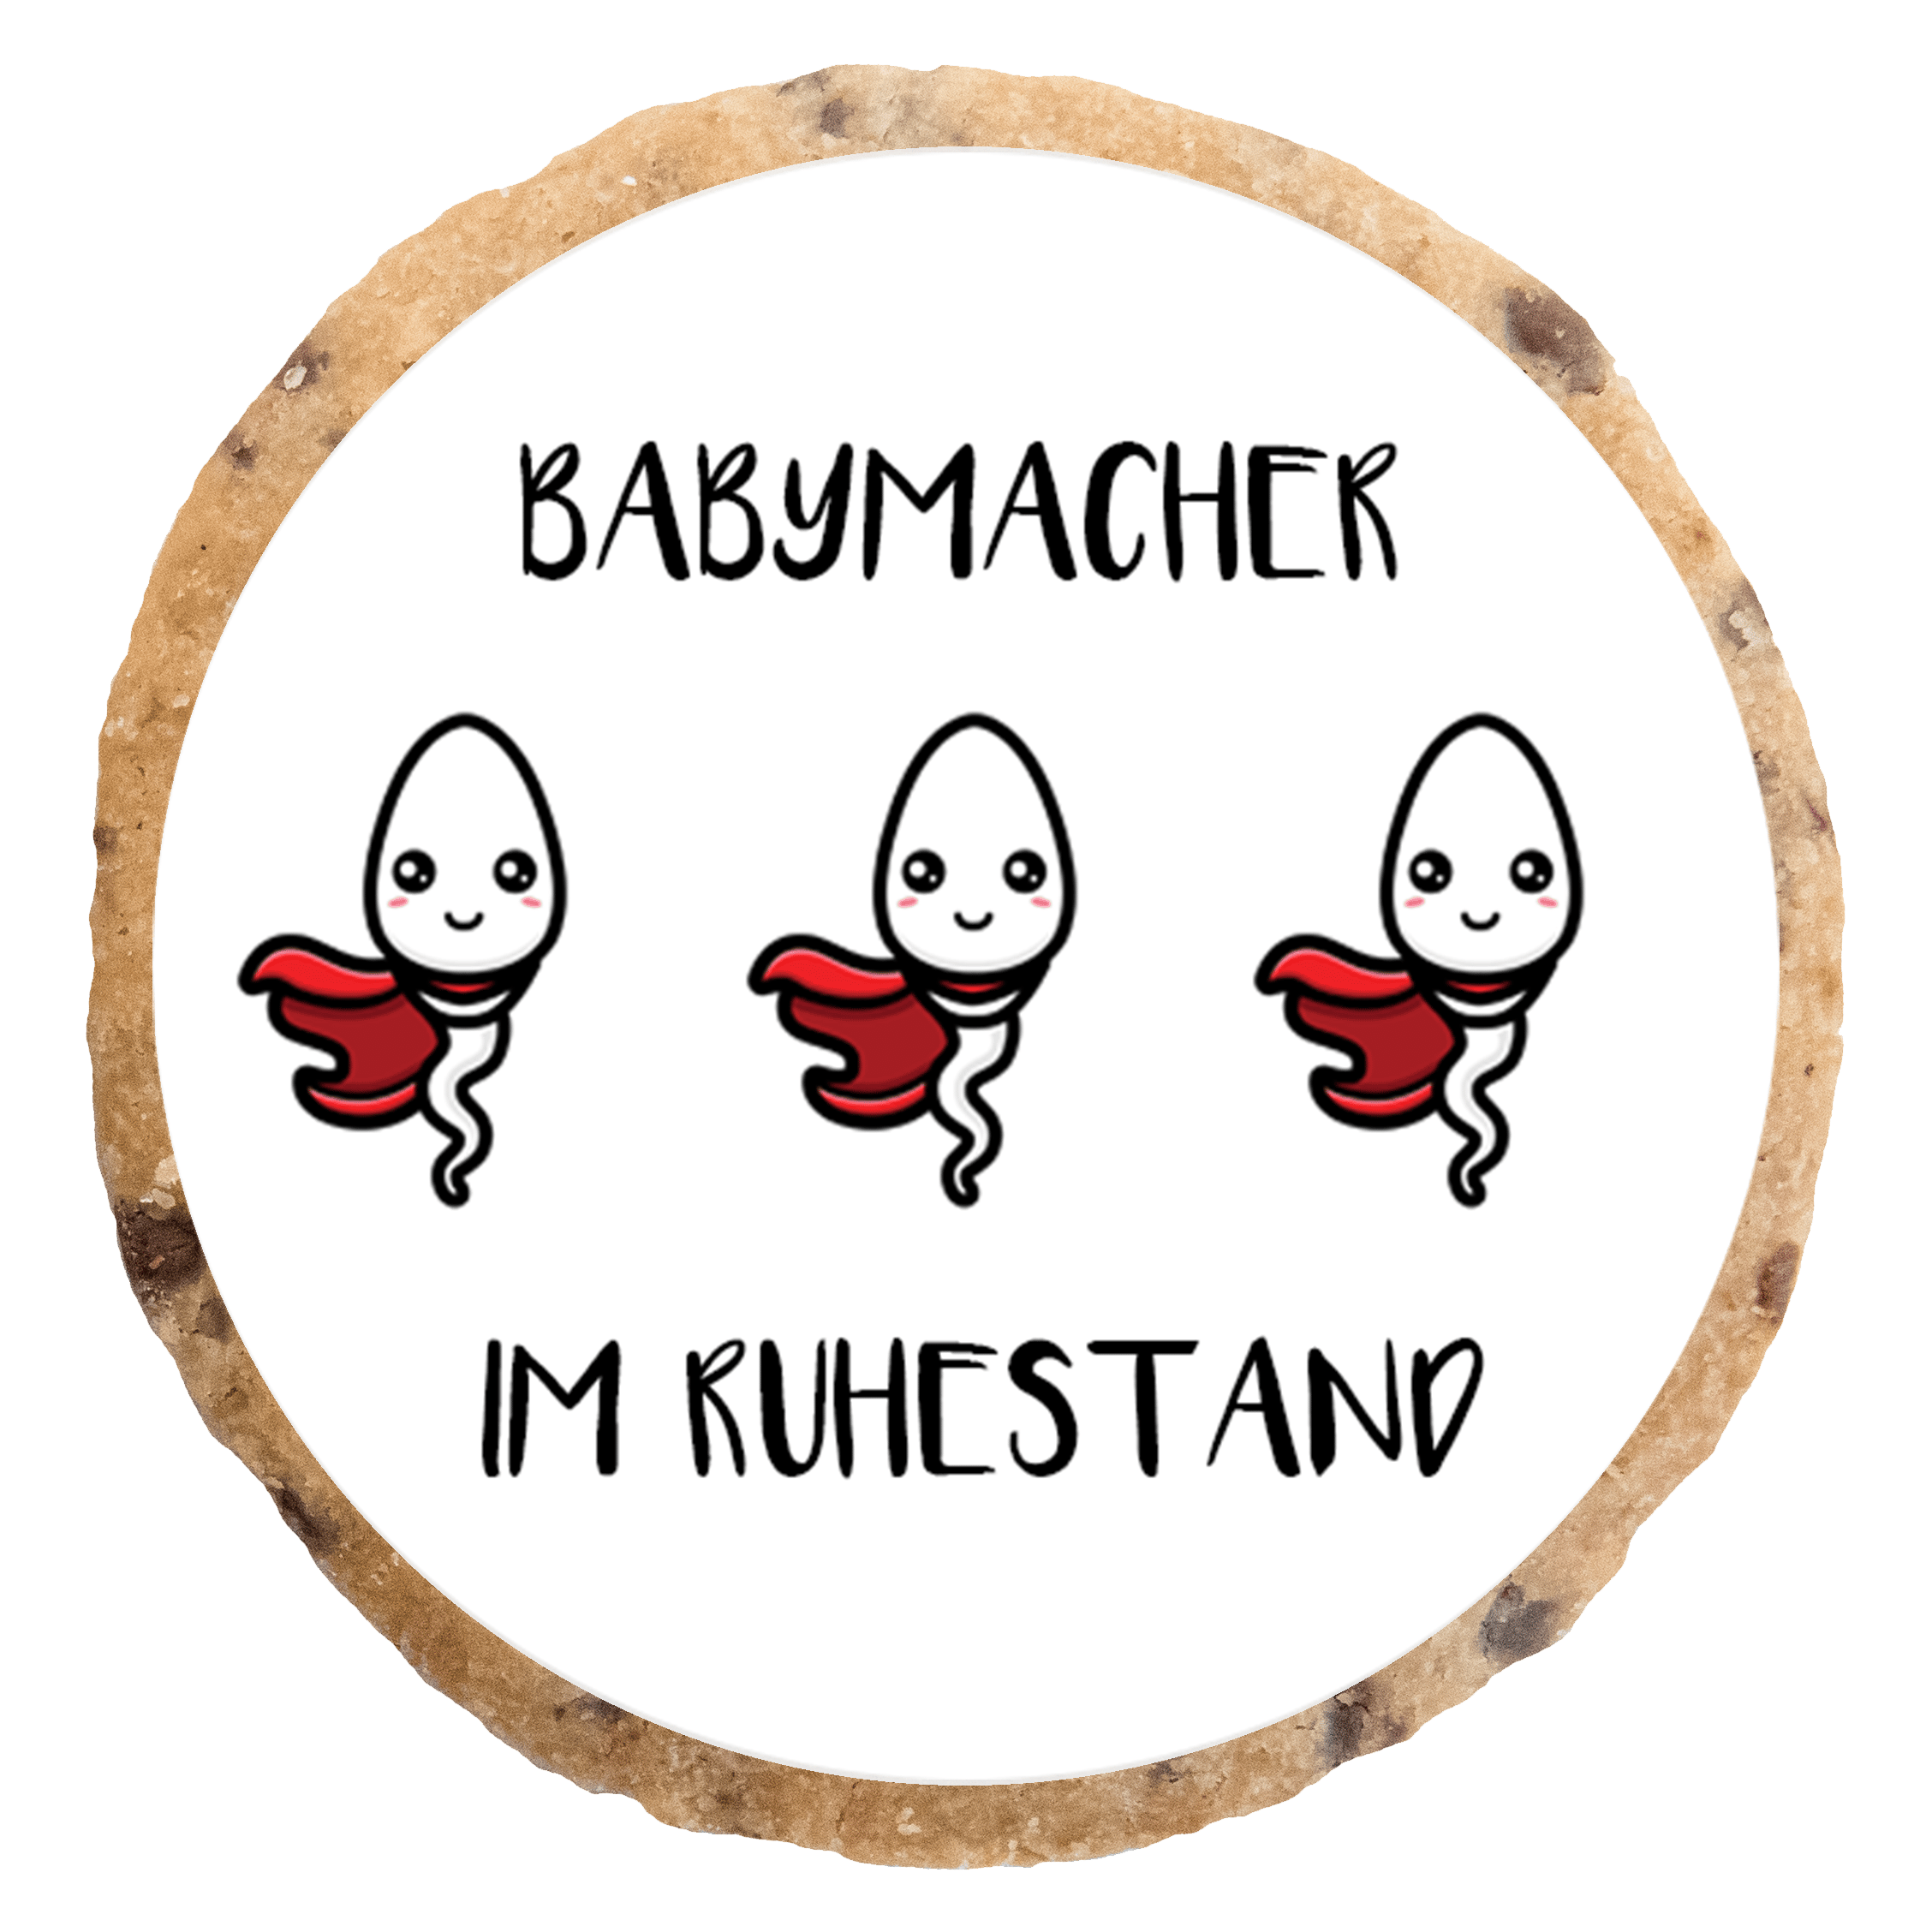 "Babymacher im Ruhestand" MotivKEKS